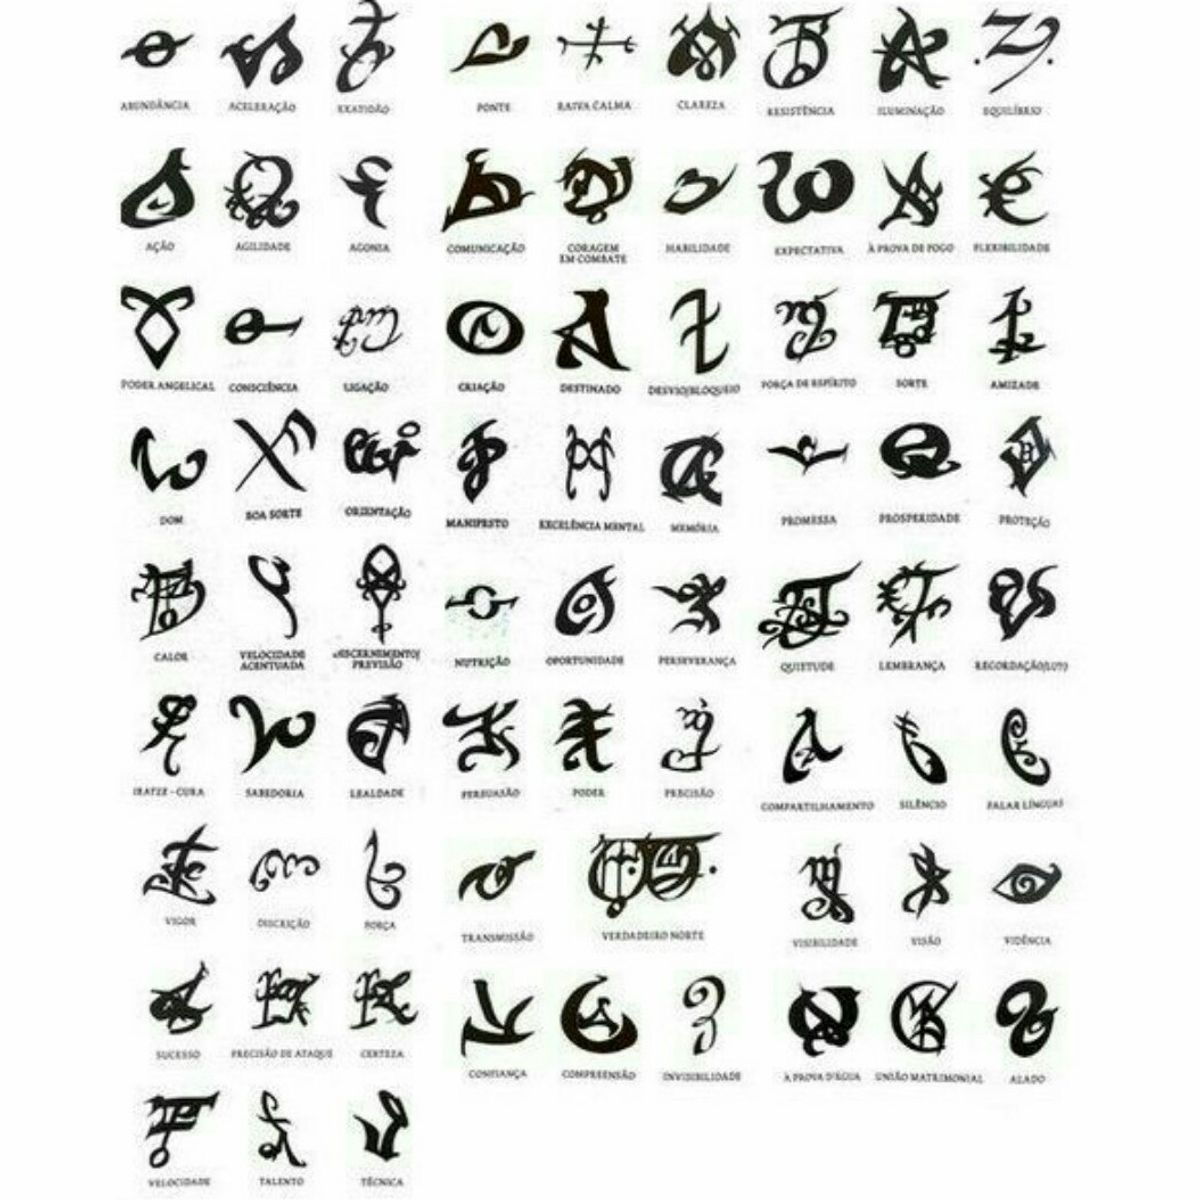 mortal instruments runes tattoo